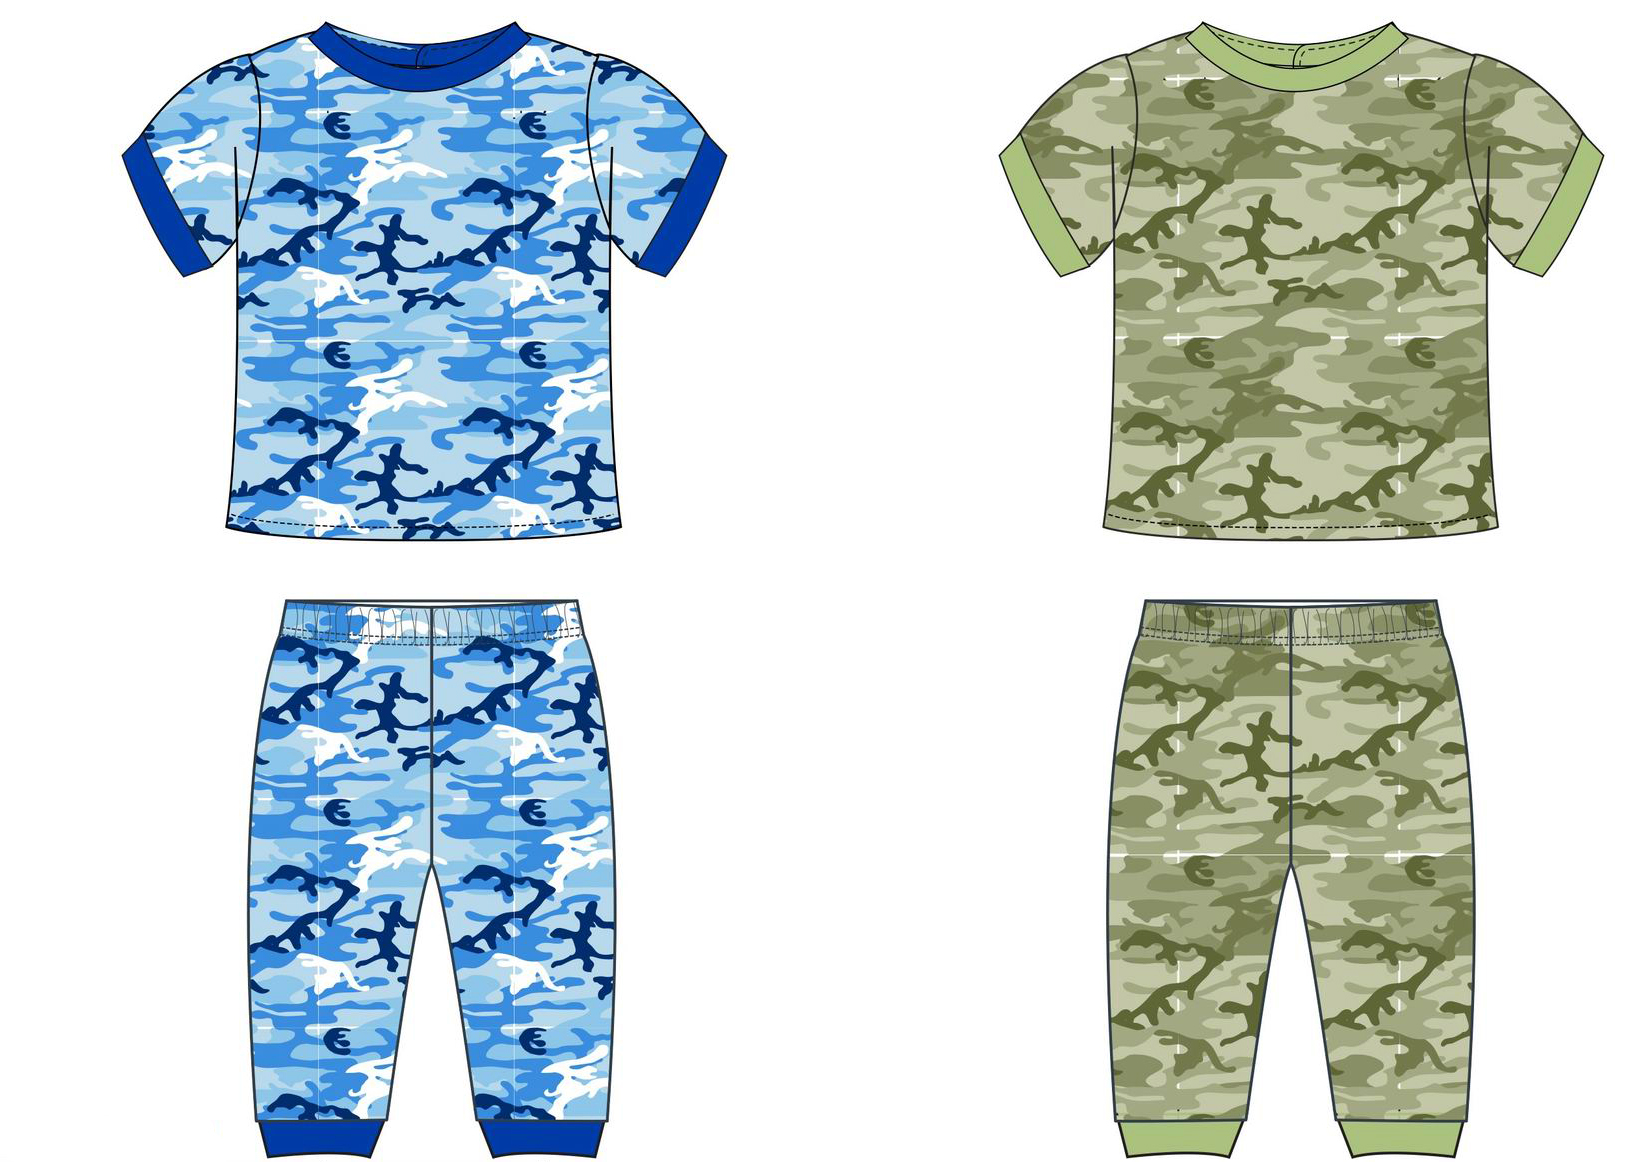 Boy's 2 PC. Rib Pajama Sets w/ Short-Sleeve SHIRT & Pull-On Pants - Camo Print - Sizes 12M-24M